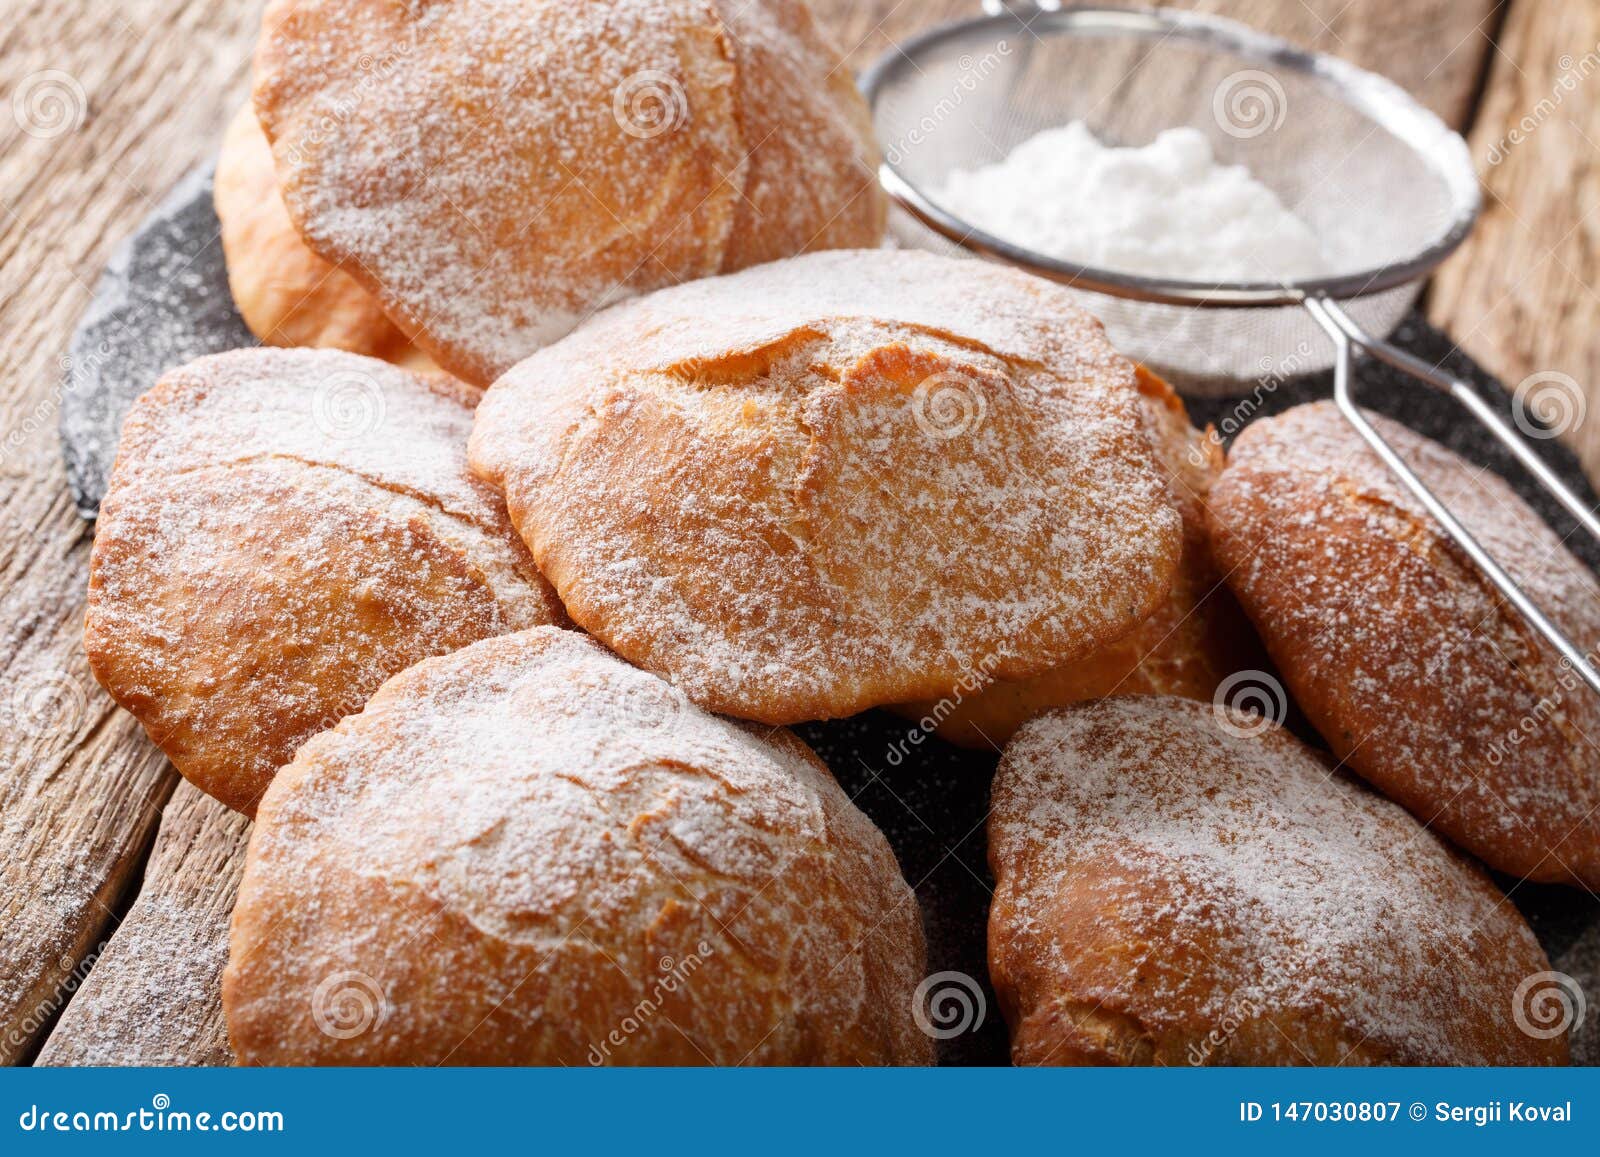 sweet deep-fried bunuelos sprinkled with powdered sugar close-up. horizontal